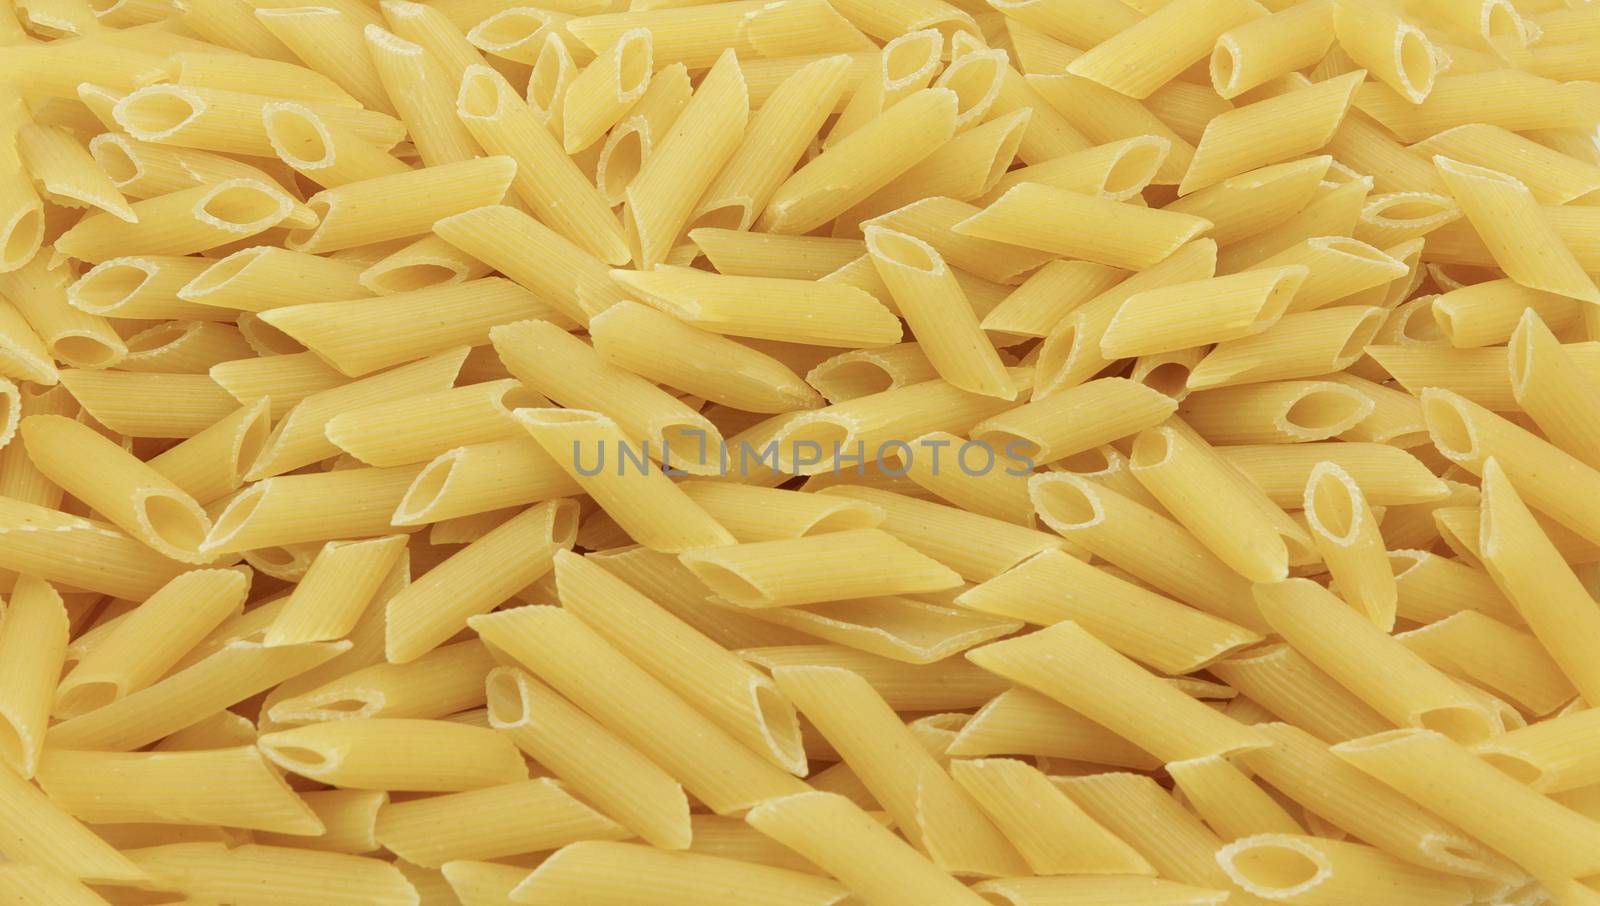 Texture of spaghetti- raw uncooked macaroni by Studia72